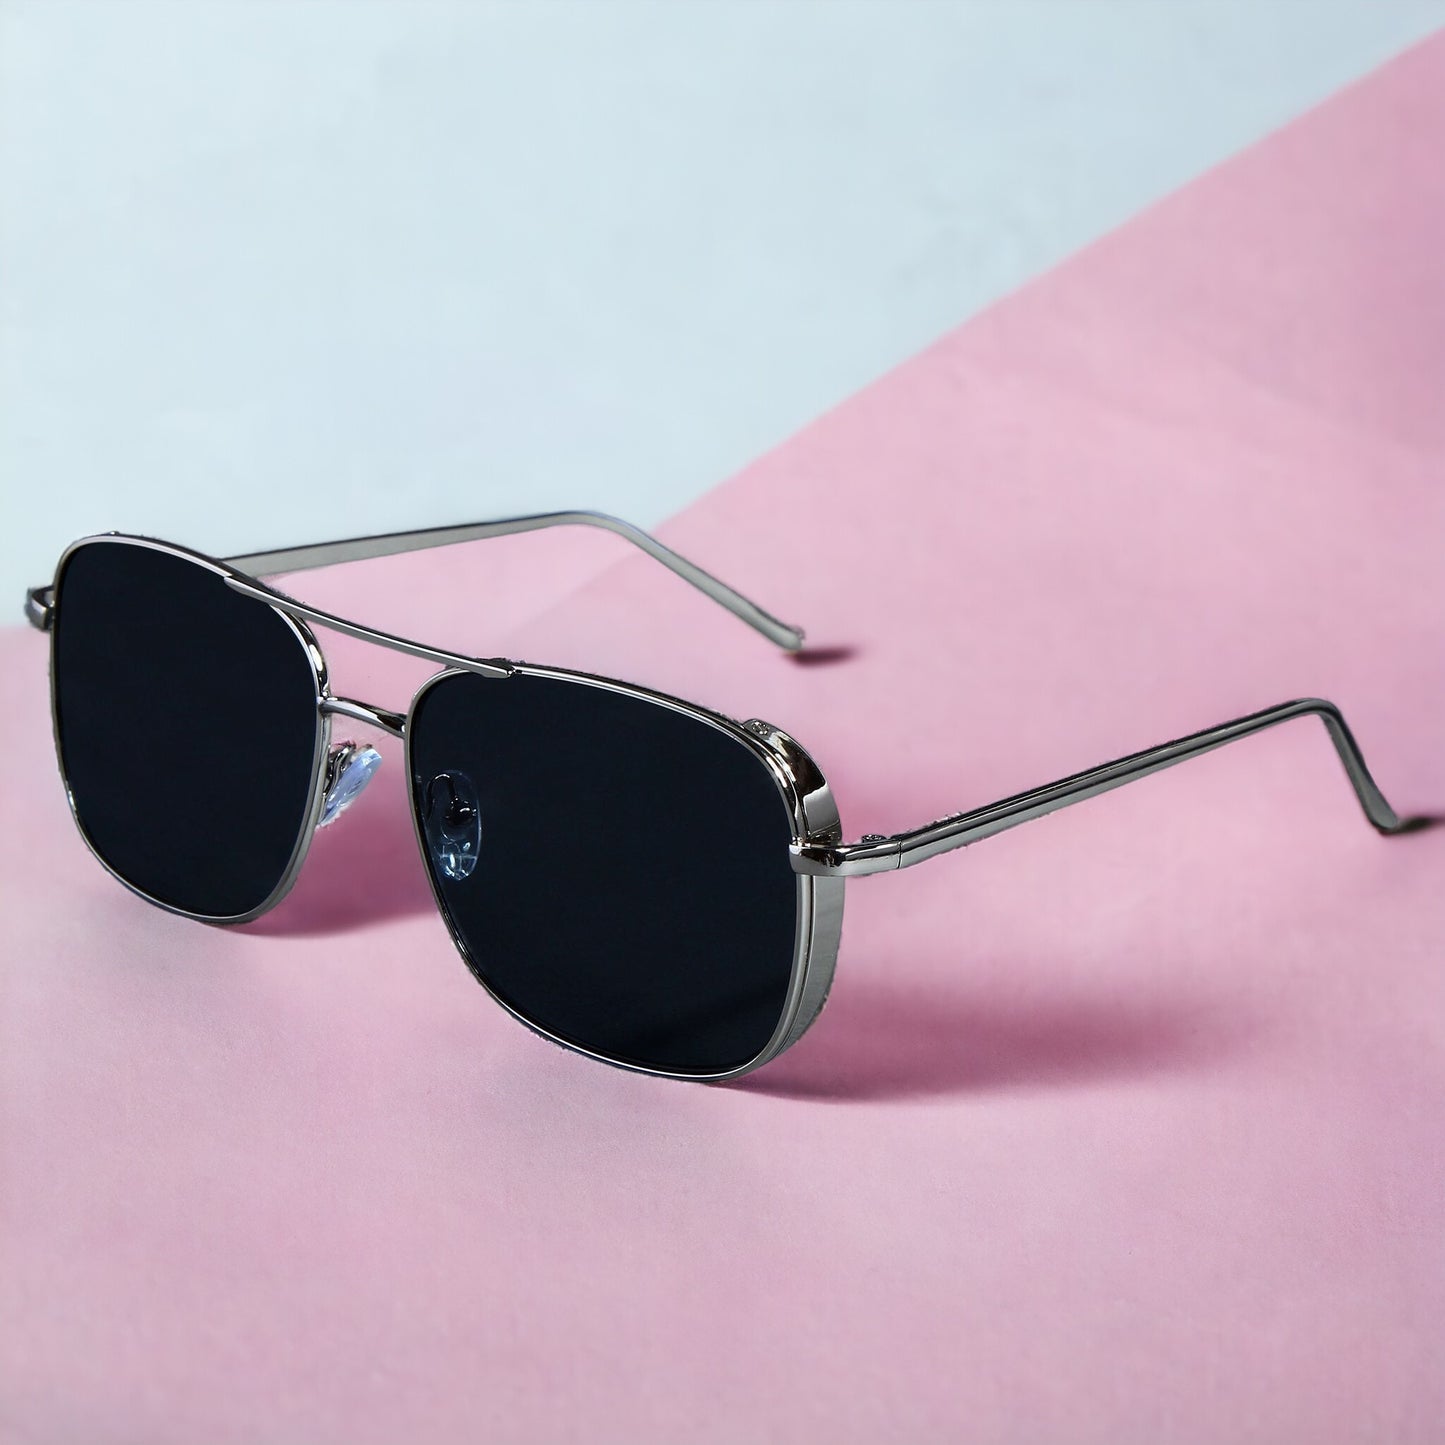 Jacques Silver Black Rectangle Sunglasses